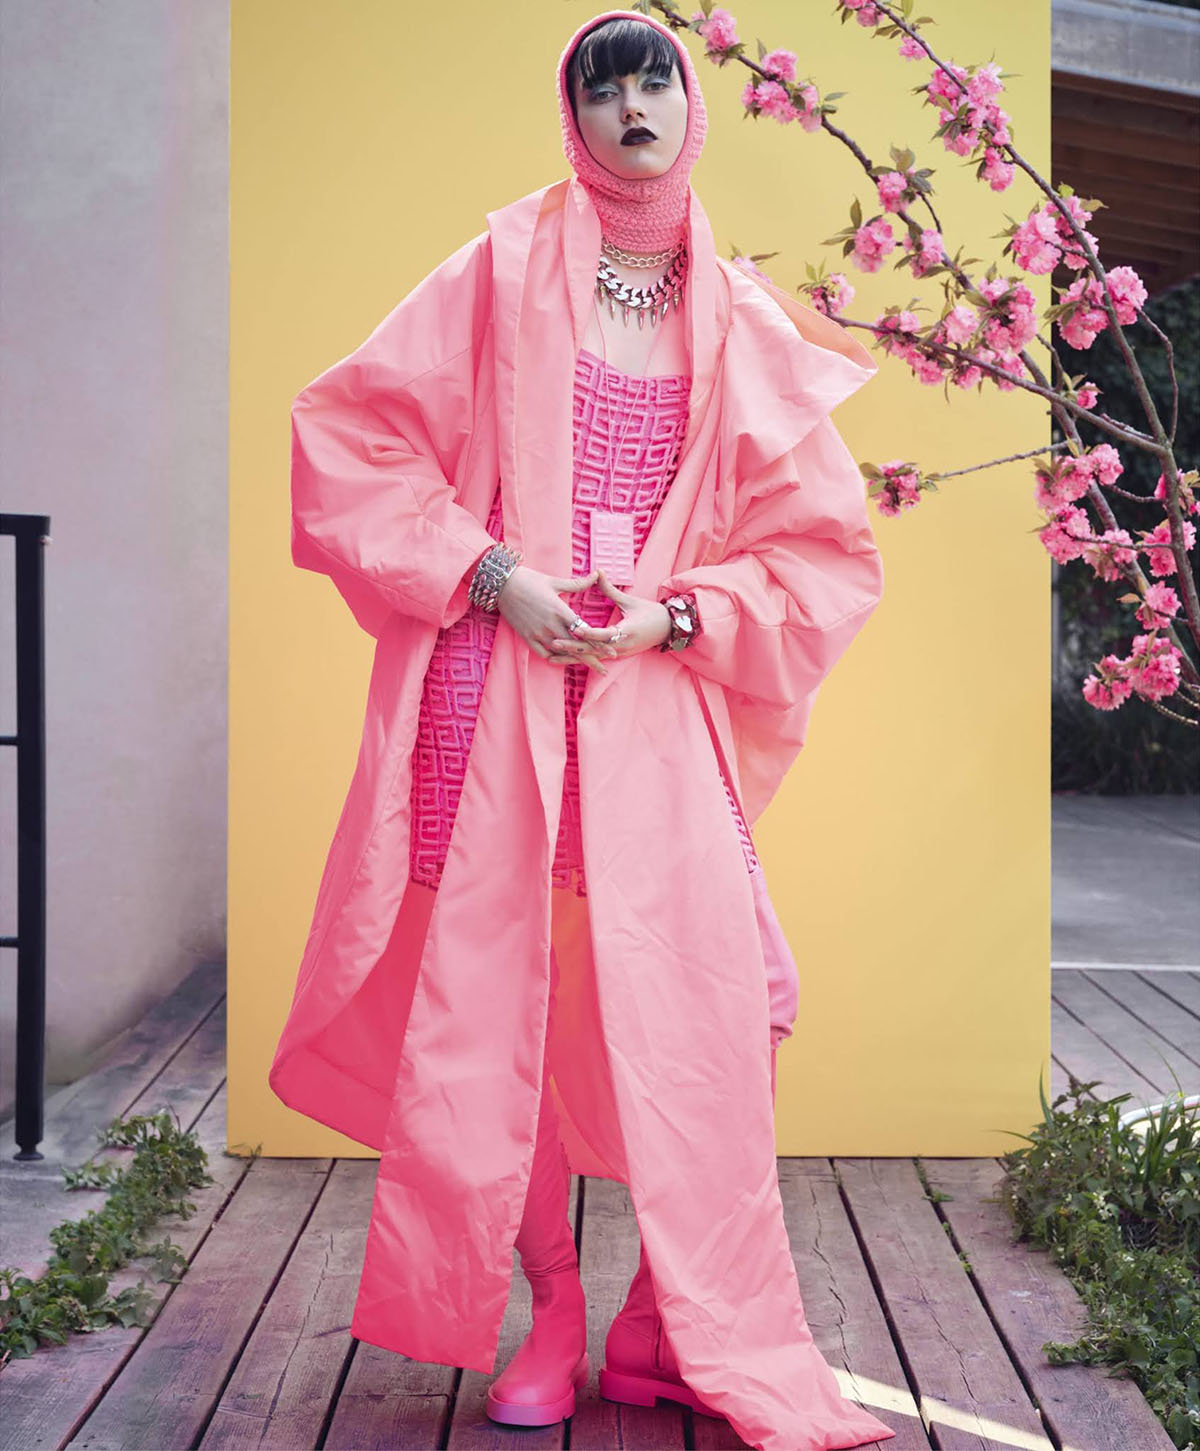 Sofia Steinberg by Nathaniel Goldberg for Vogue Japan July 2021